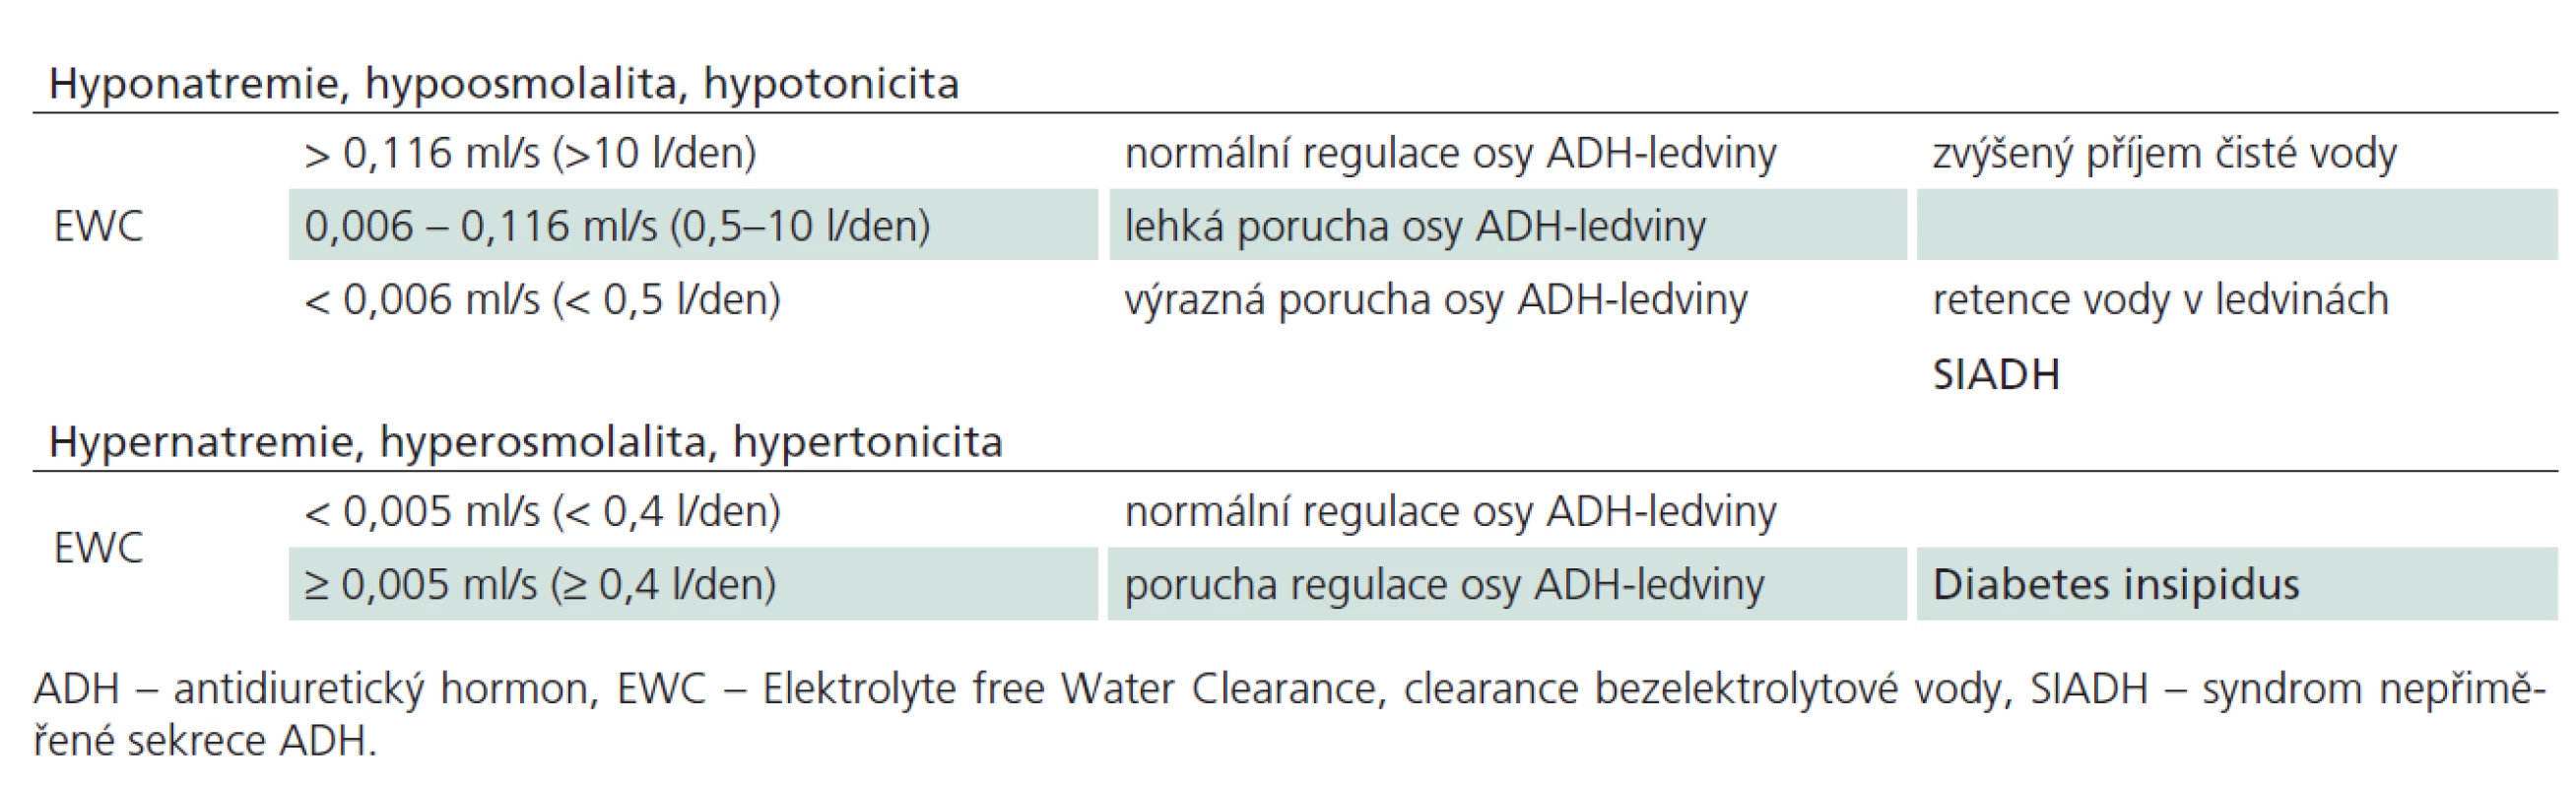 Regulace osy ADH-ledviny podle Shokera [6].